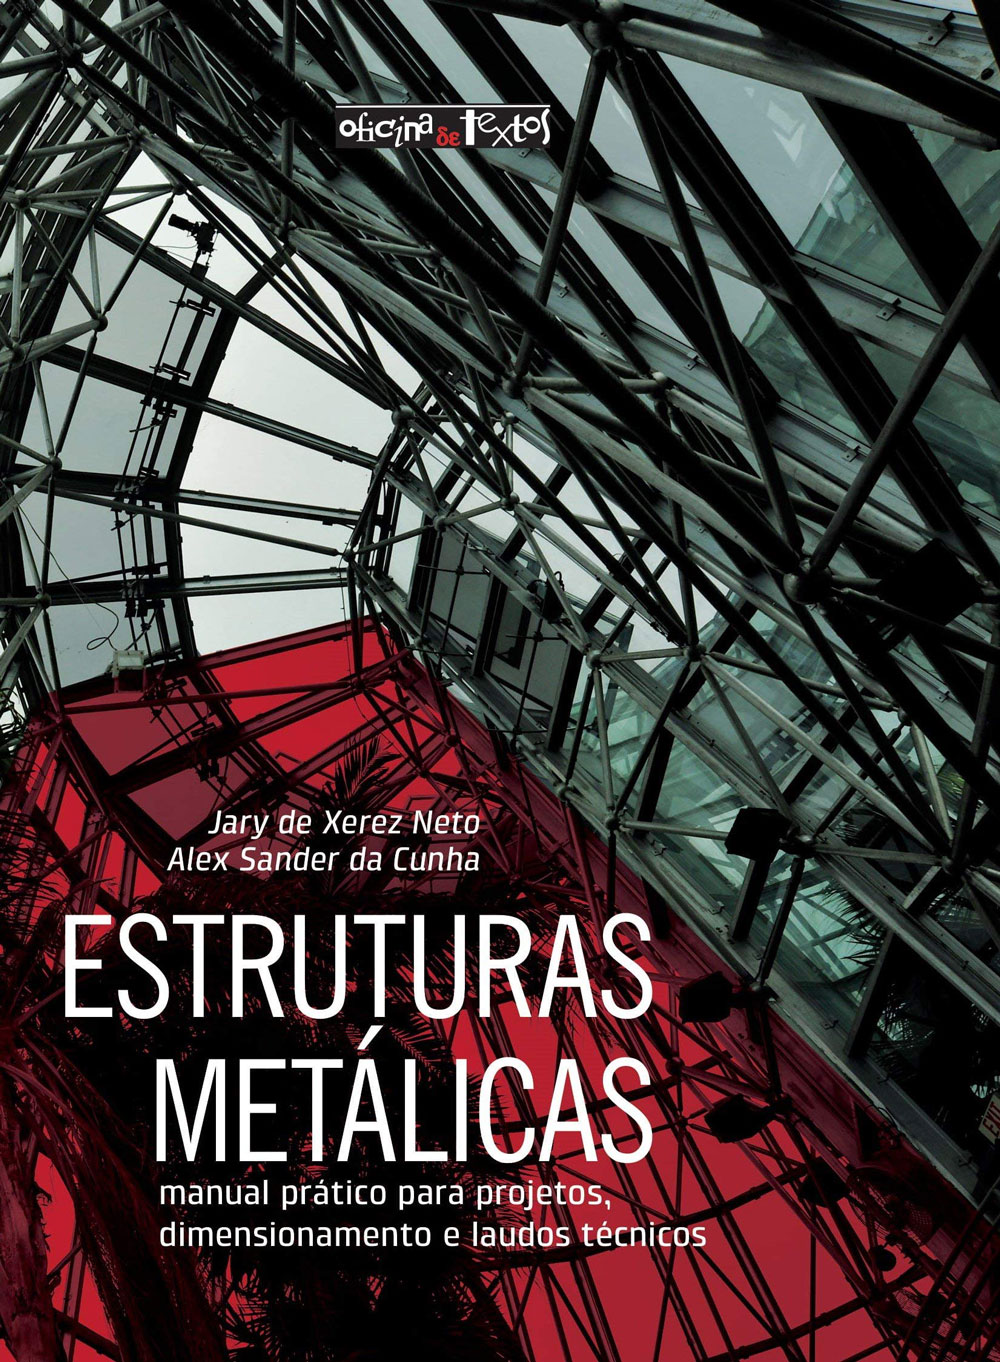 Estruturas Metálicas: Manual Prático Para Projetos, Dimensionamento e Laudos Técnicos - Jary de Xerez Neto, Alex Sander de Cunha